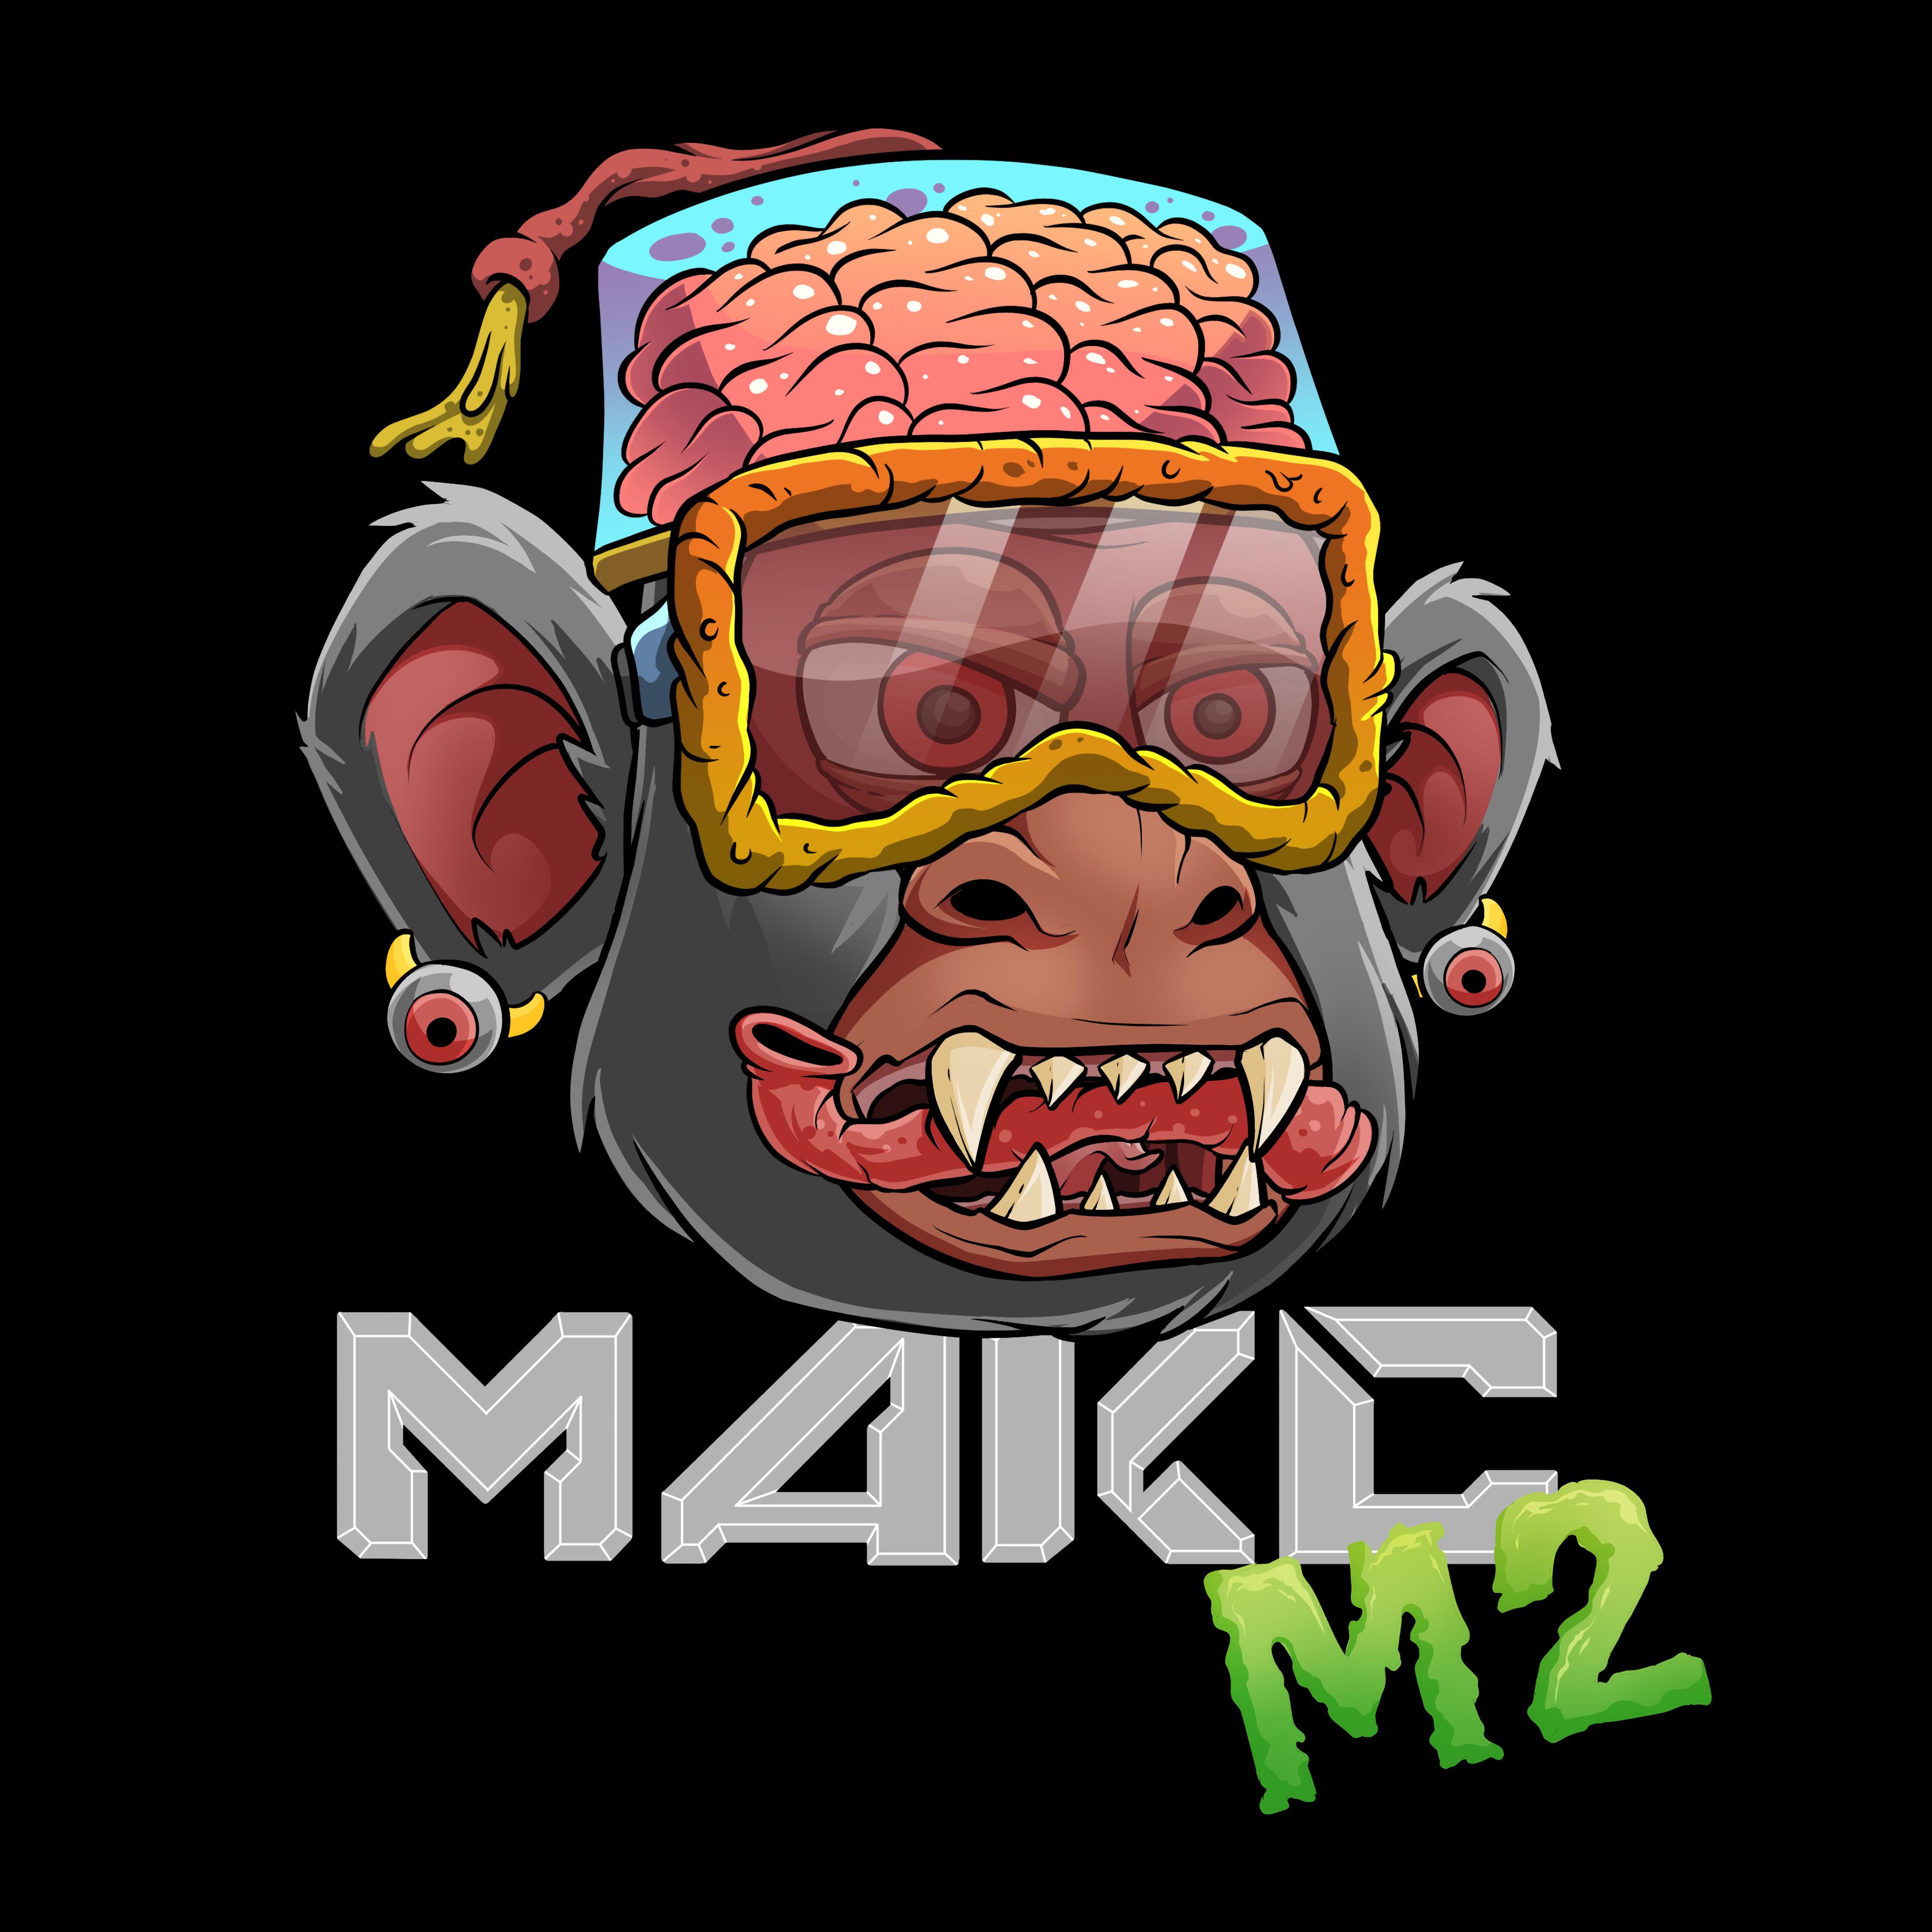 Mutant Ape Kids Club M2